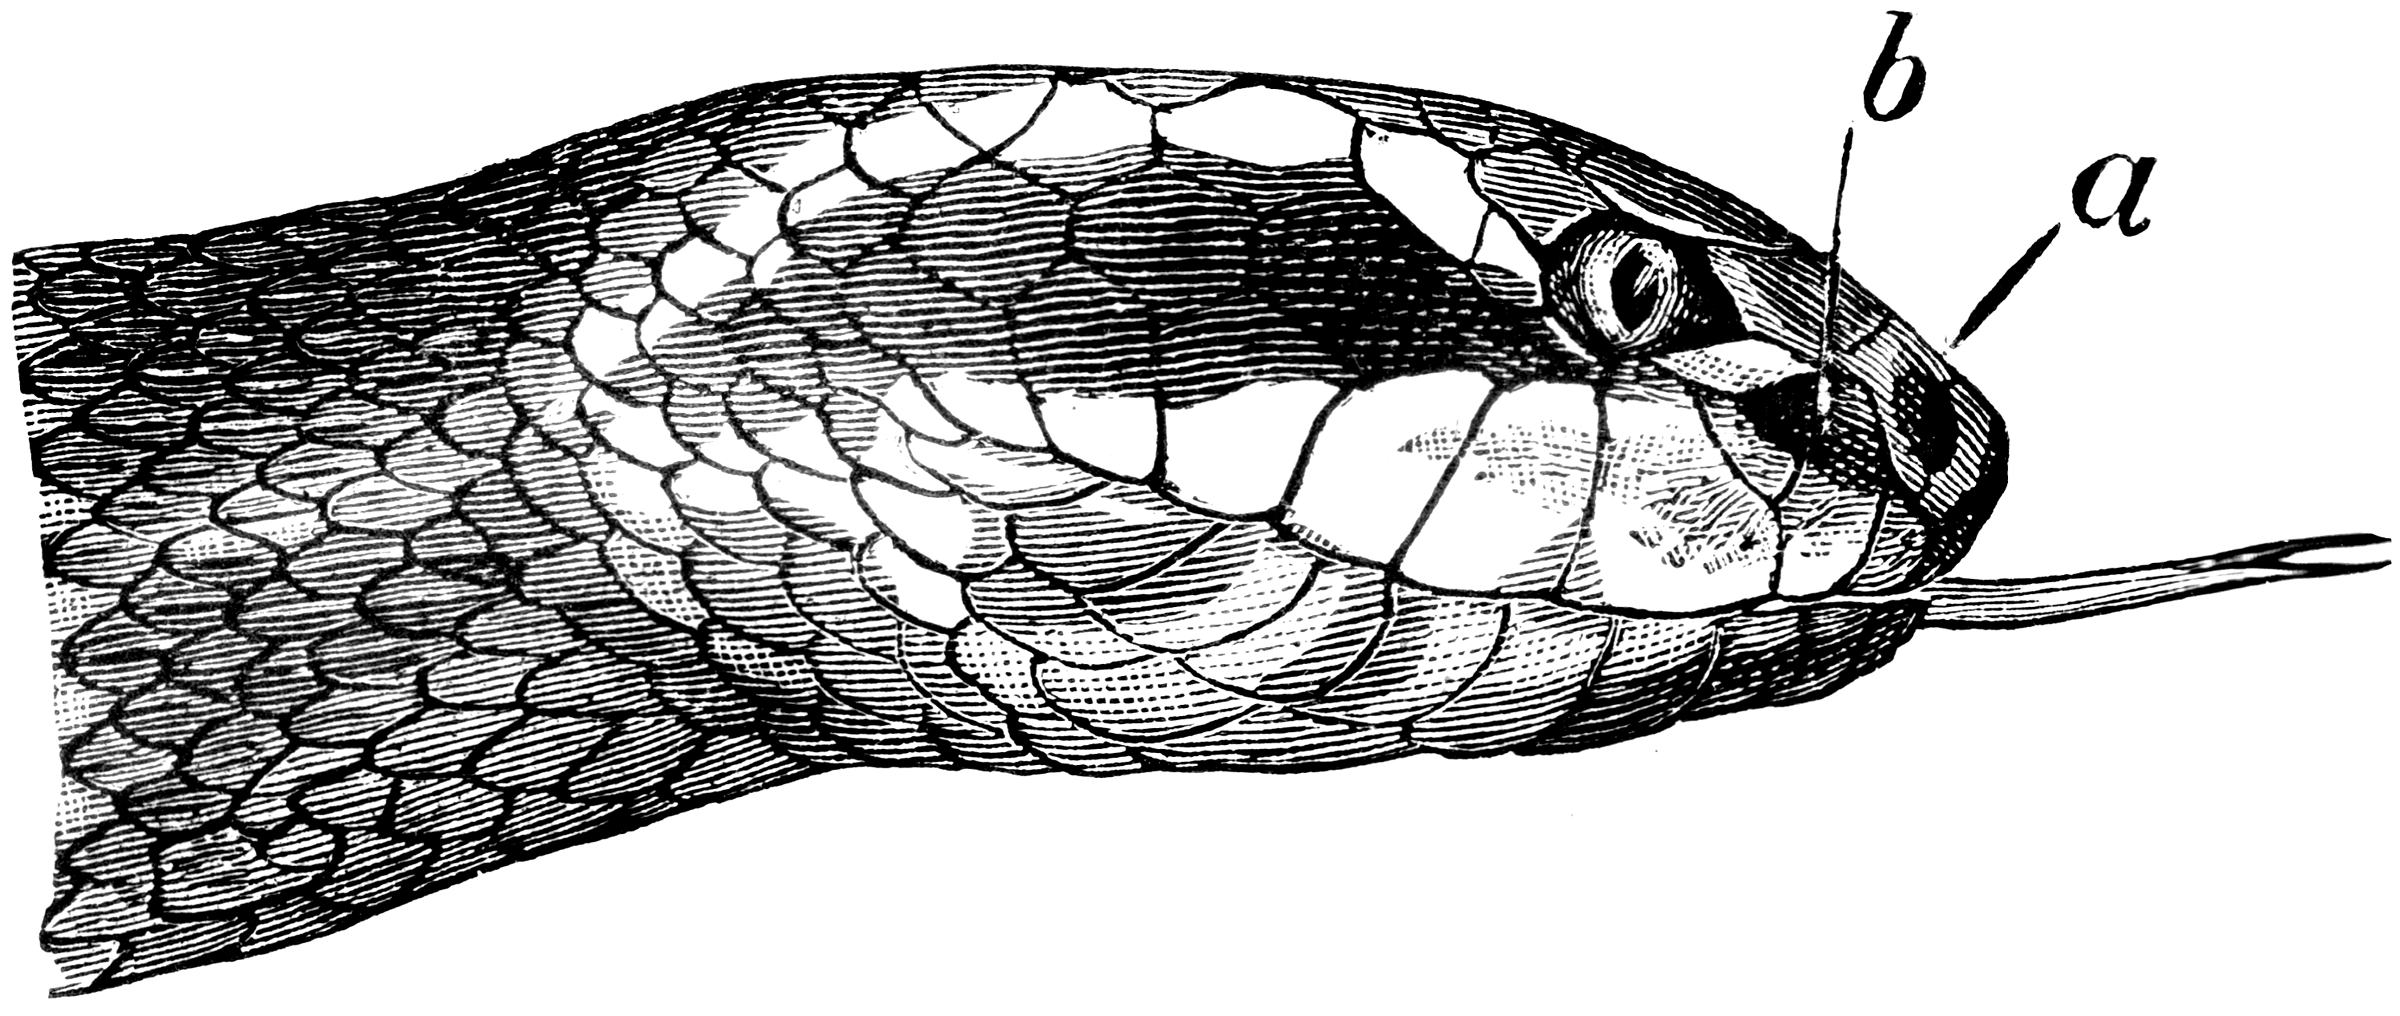 Голова змеи. Голова змеи рисунок. Голова змеи сверху. Голова змеи сверху рисунок.